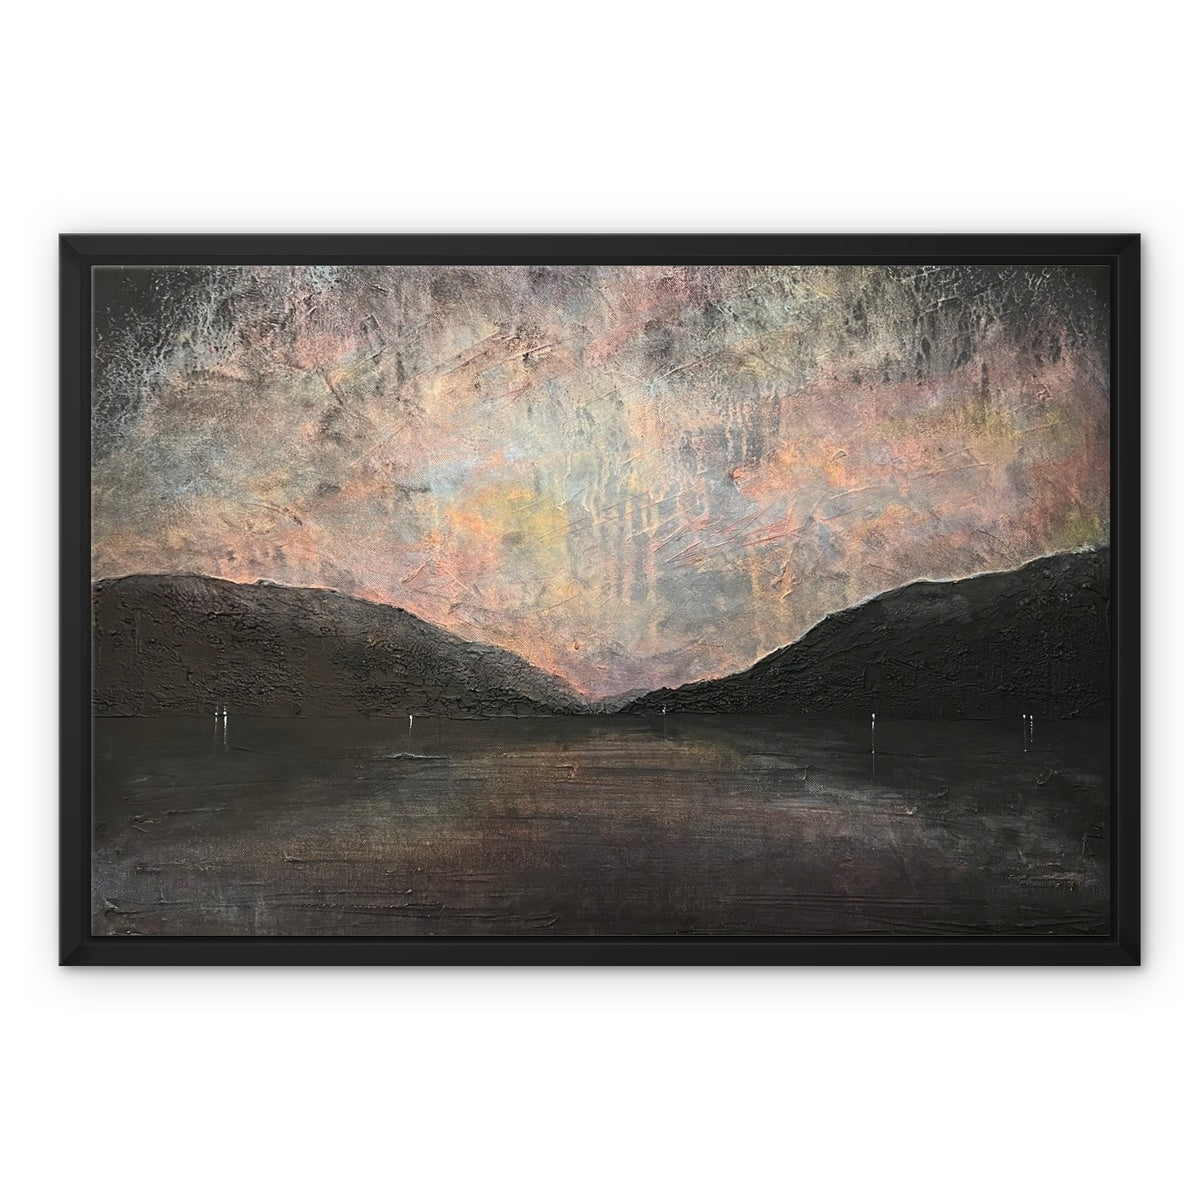 A Brooding Loch Lomond Painting | Framed Canvas From Scotland-Floating Framed Canvas Prints-Scottish Lochs & Mountains Art Gallery-24"x18"-Black Frame-Paintings, Prints, Homeware, Art Gifts From Scotland By Scottish Artist Kevin Hunter